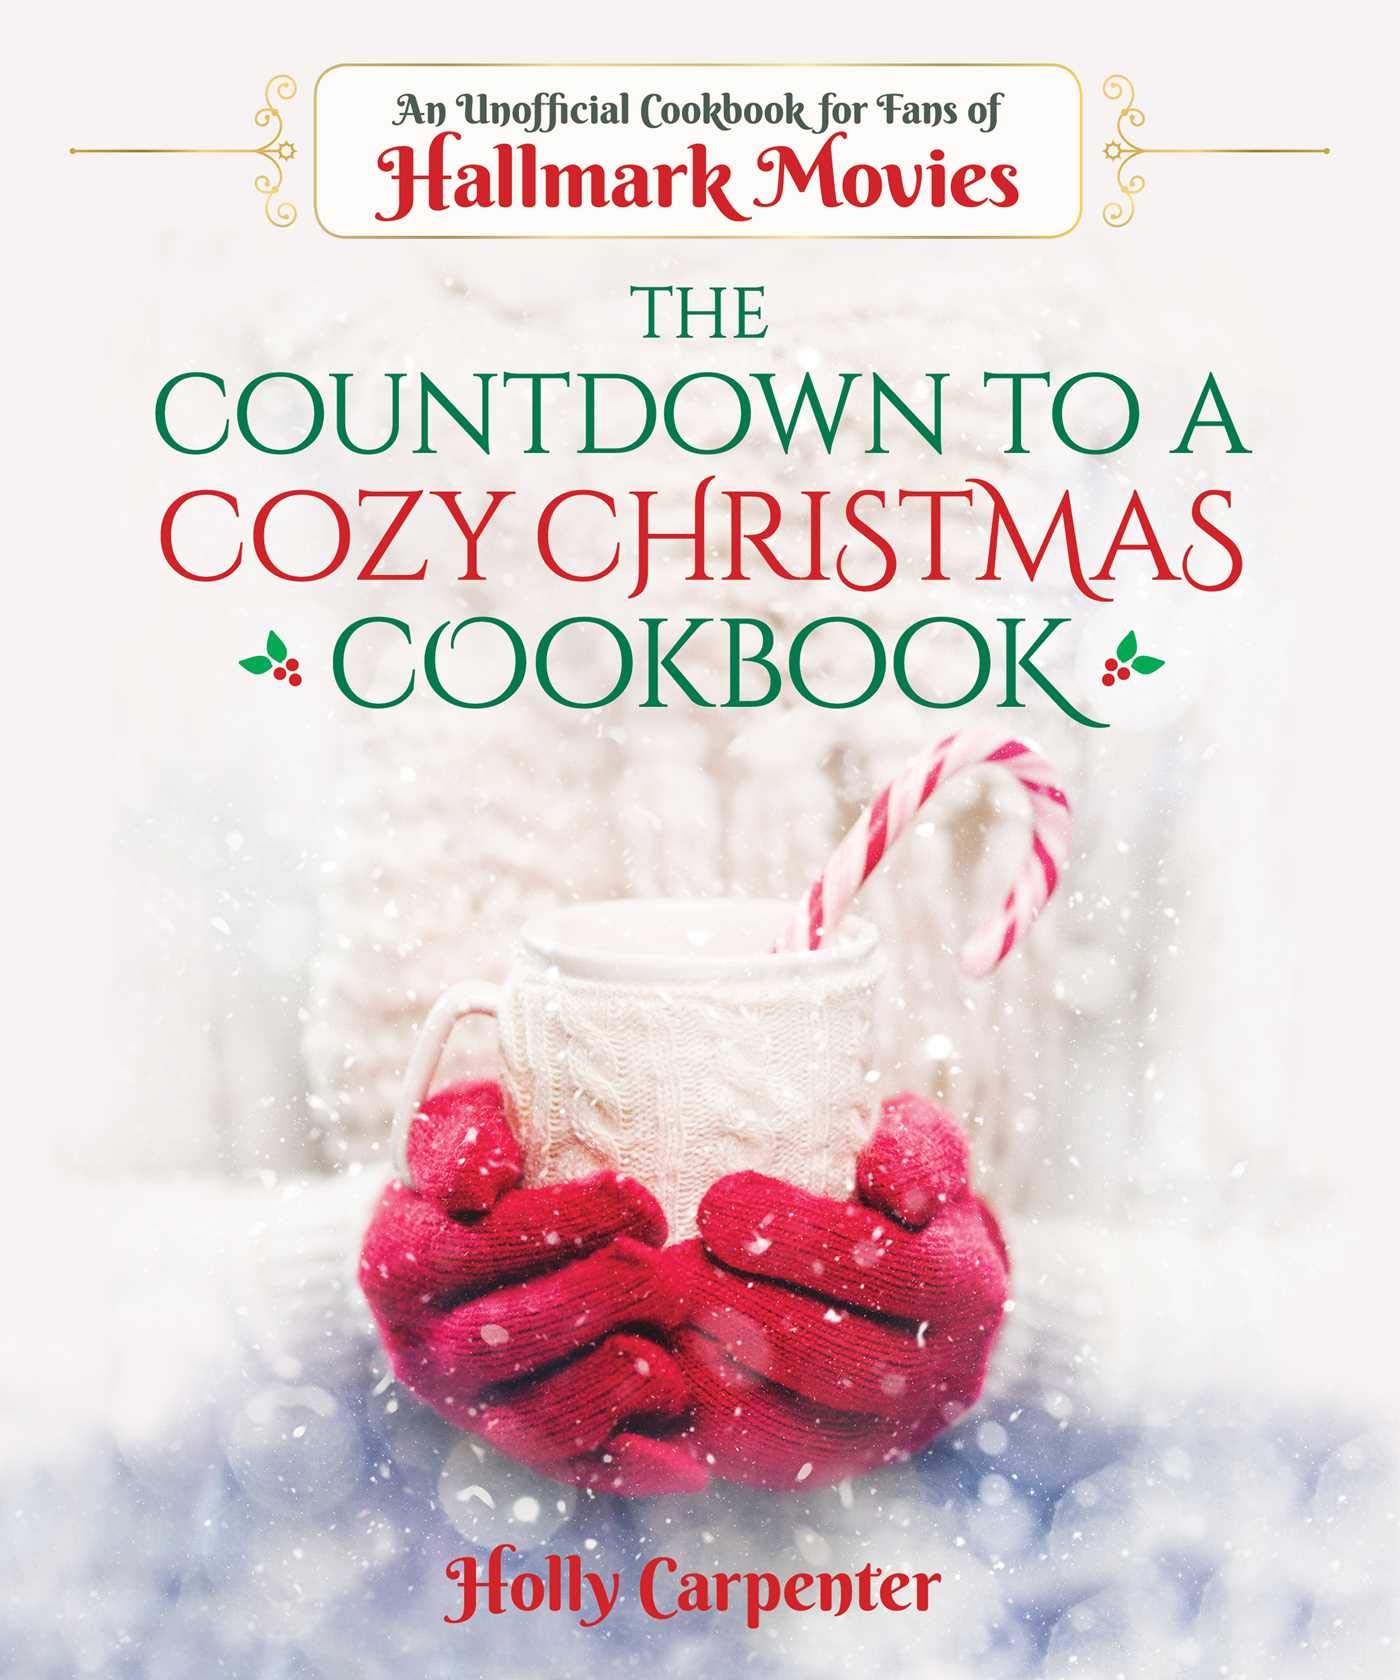 A Christmas Cookbook by Daniel Humphreys